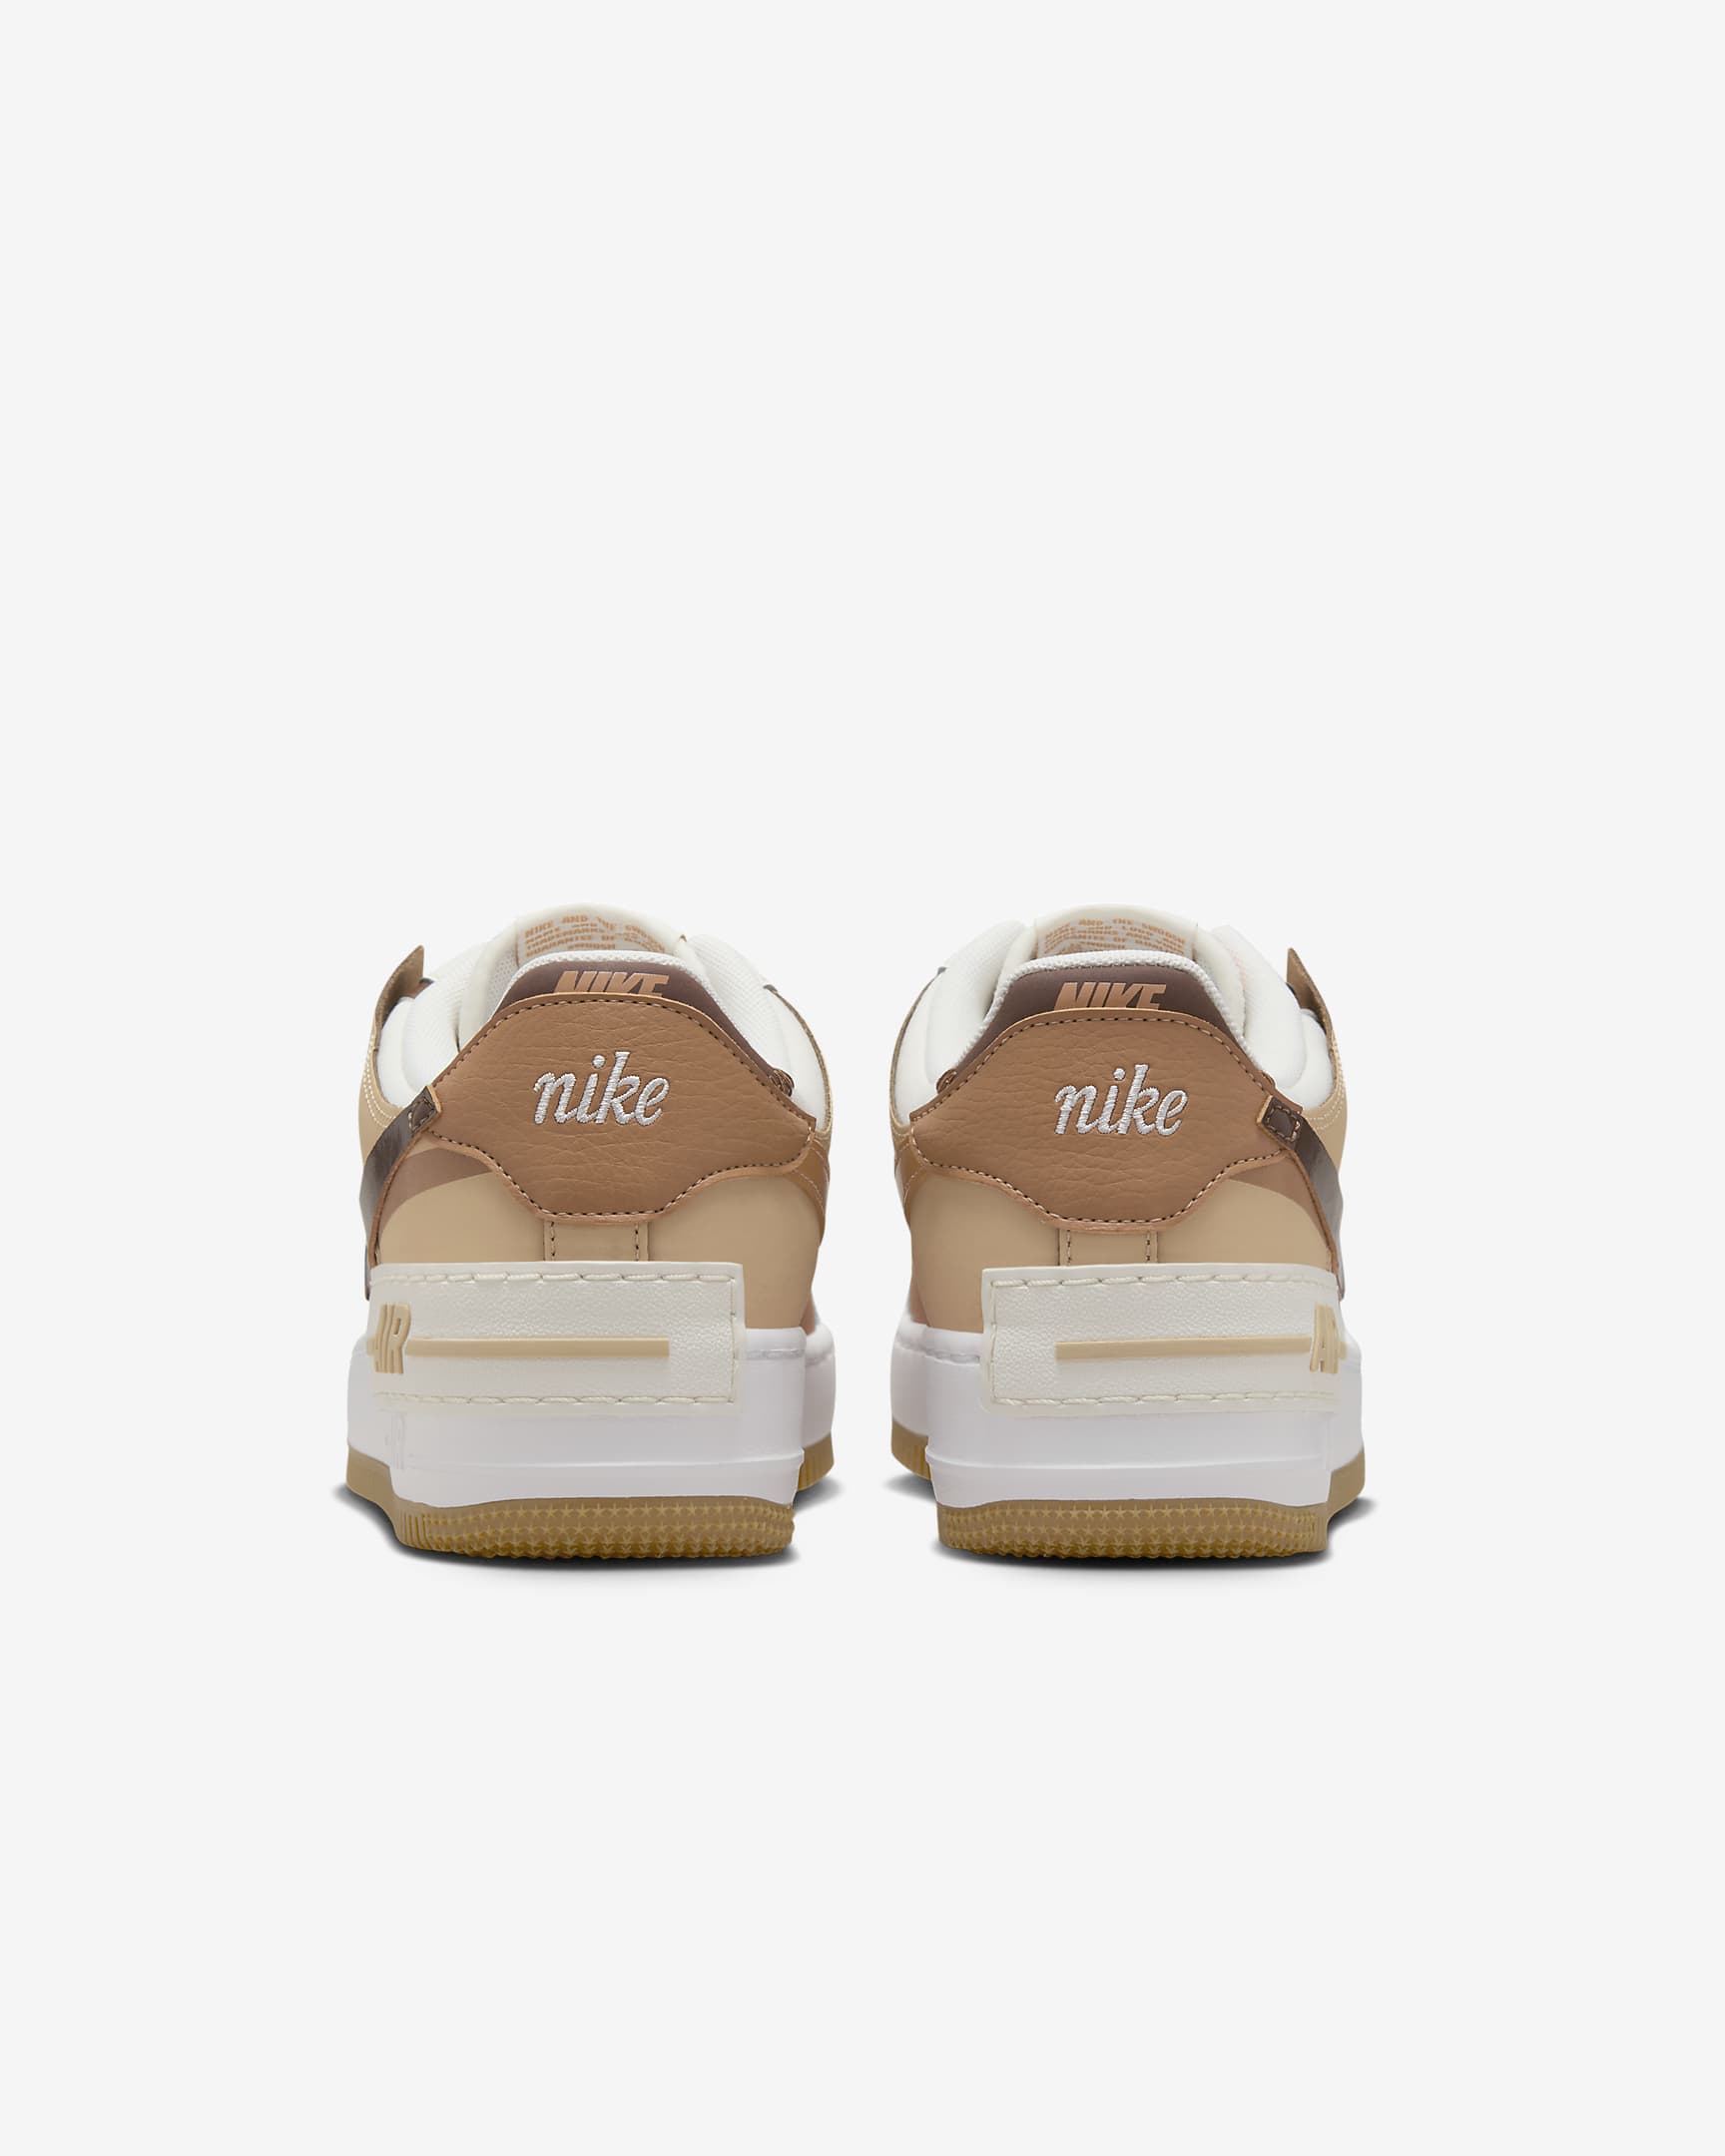 Nike Air Force 1 Shadow Women's Shoes - Sail/Flax/Sesame/Cacao Wow